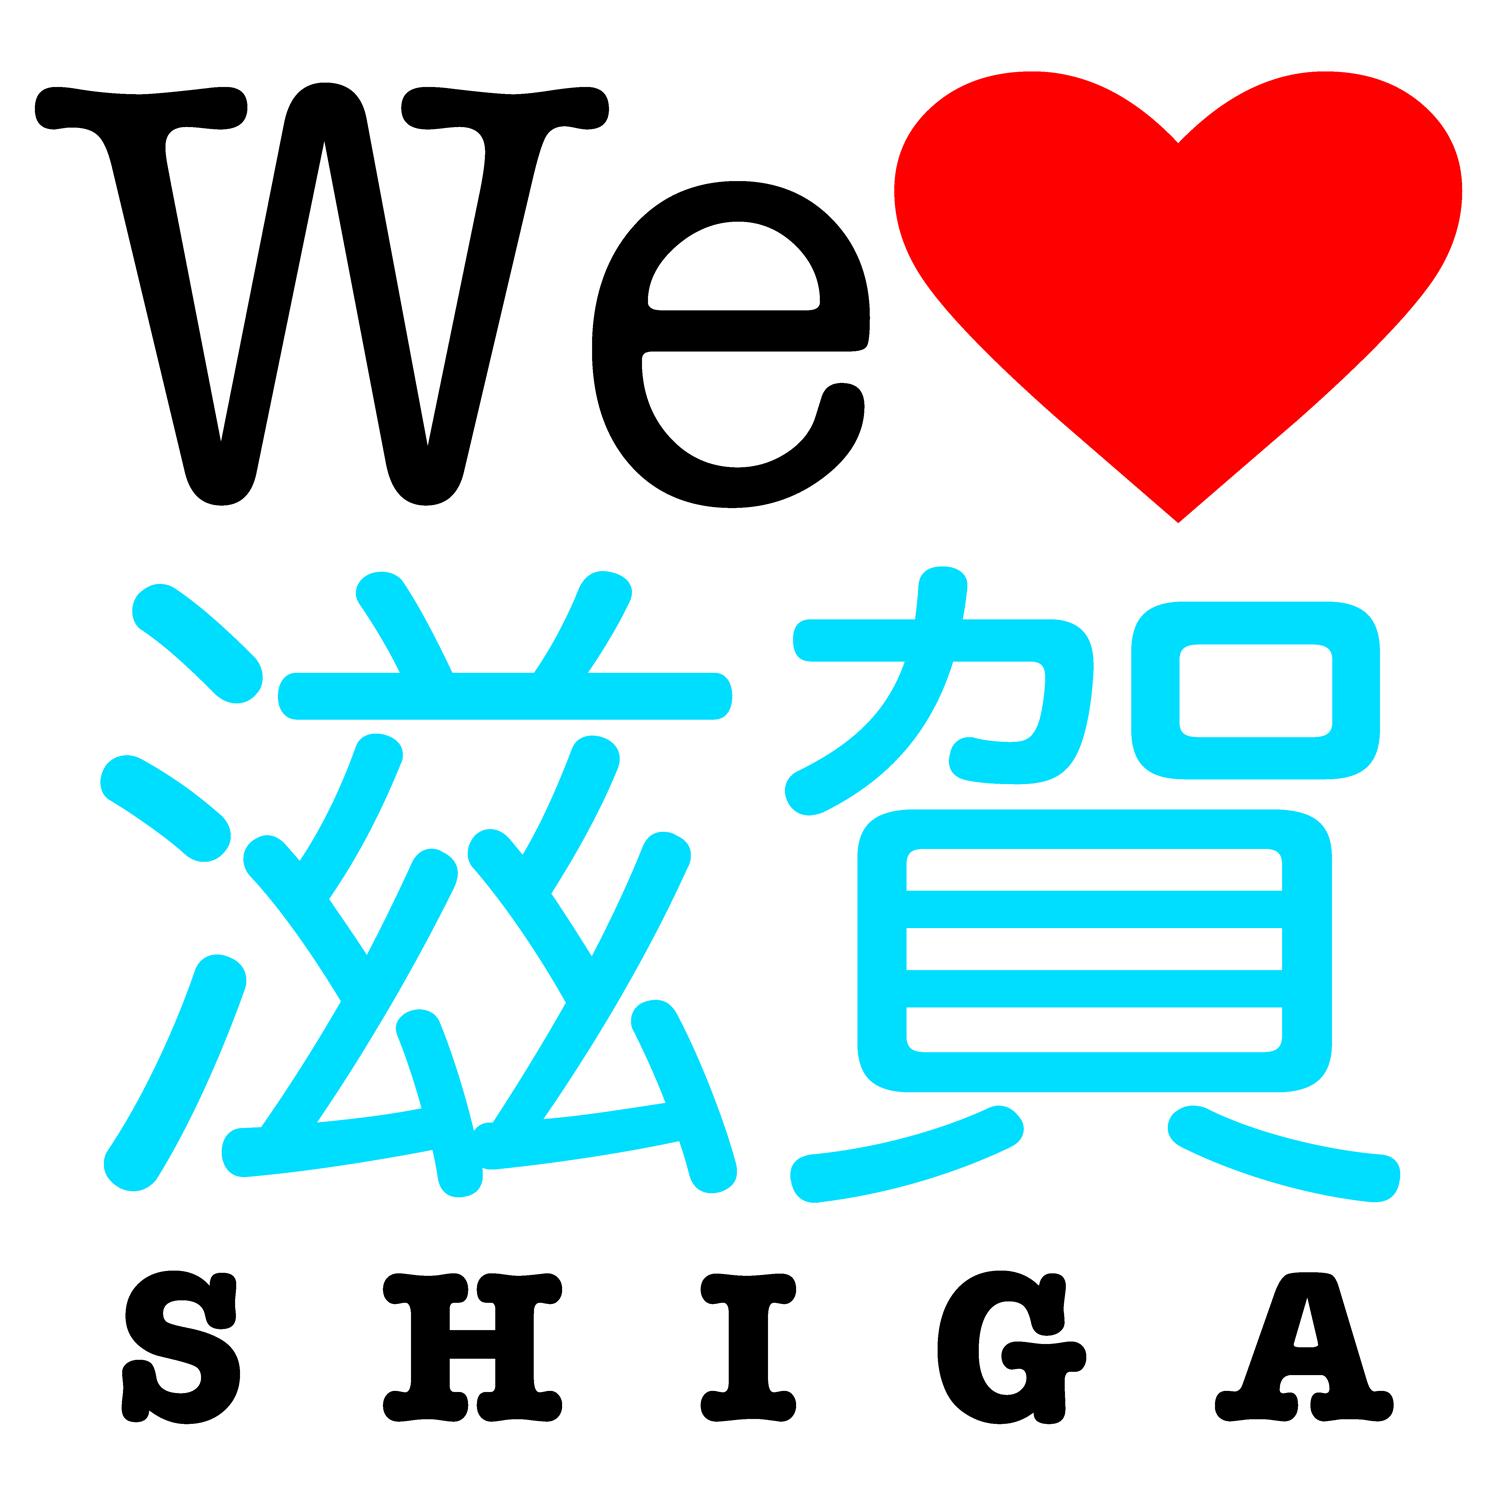 1500 × 1500 px
Keywords: we love shiga banner heart valentine